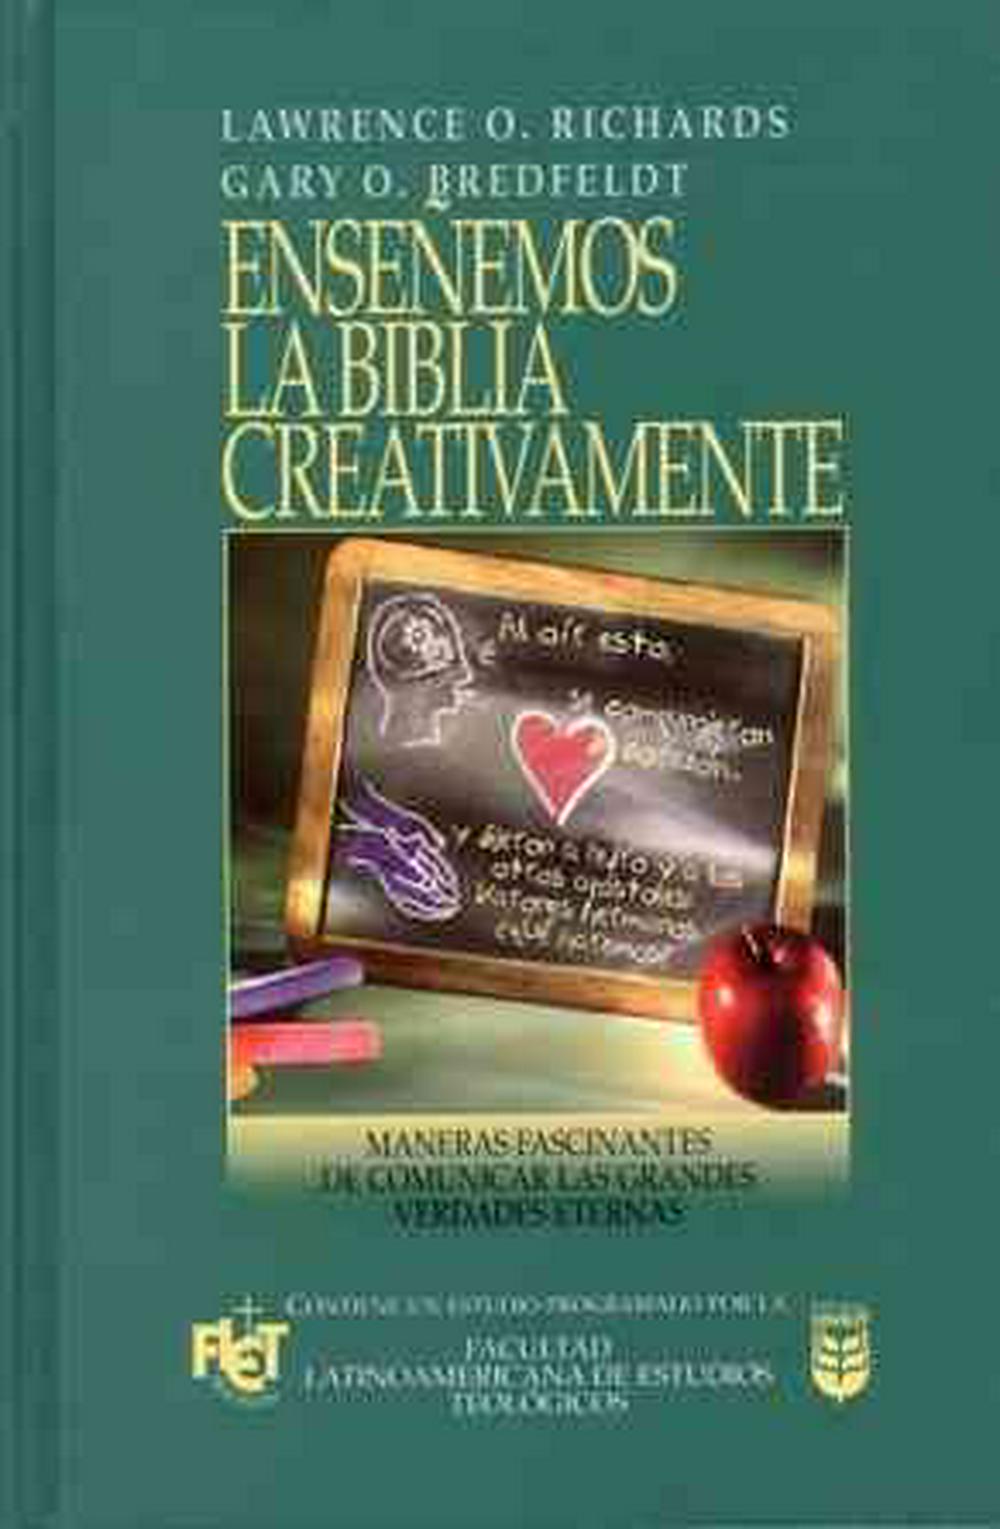 Enseñemos la Biblia Creativamente  -  G.J. Bredfeldt & L.O. Richards